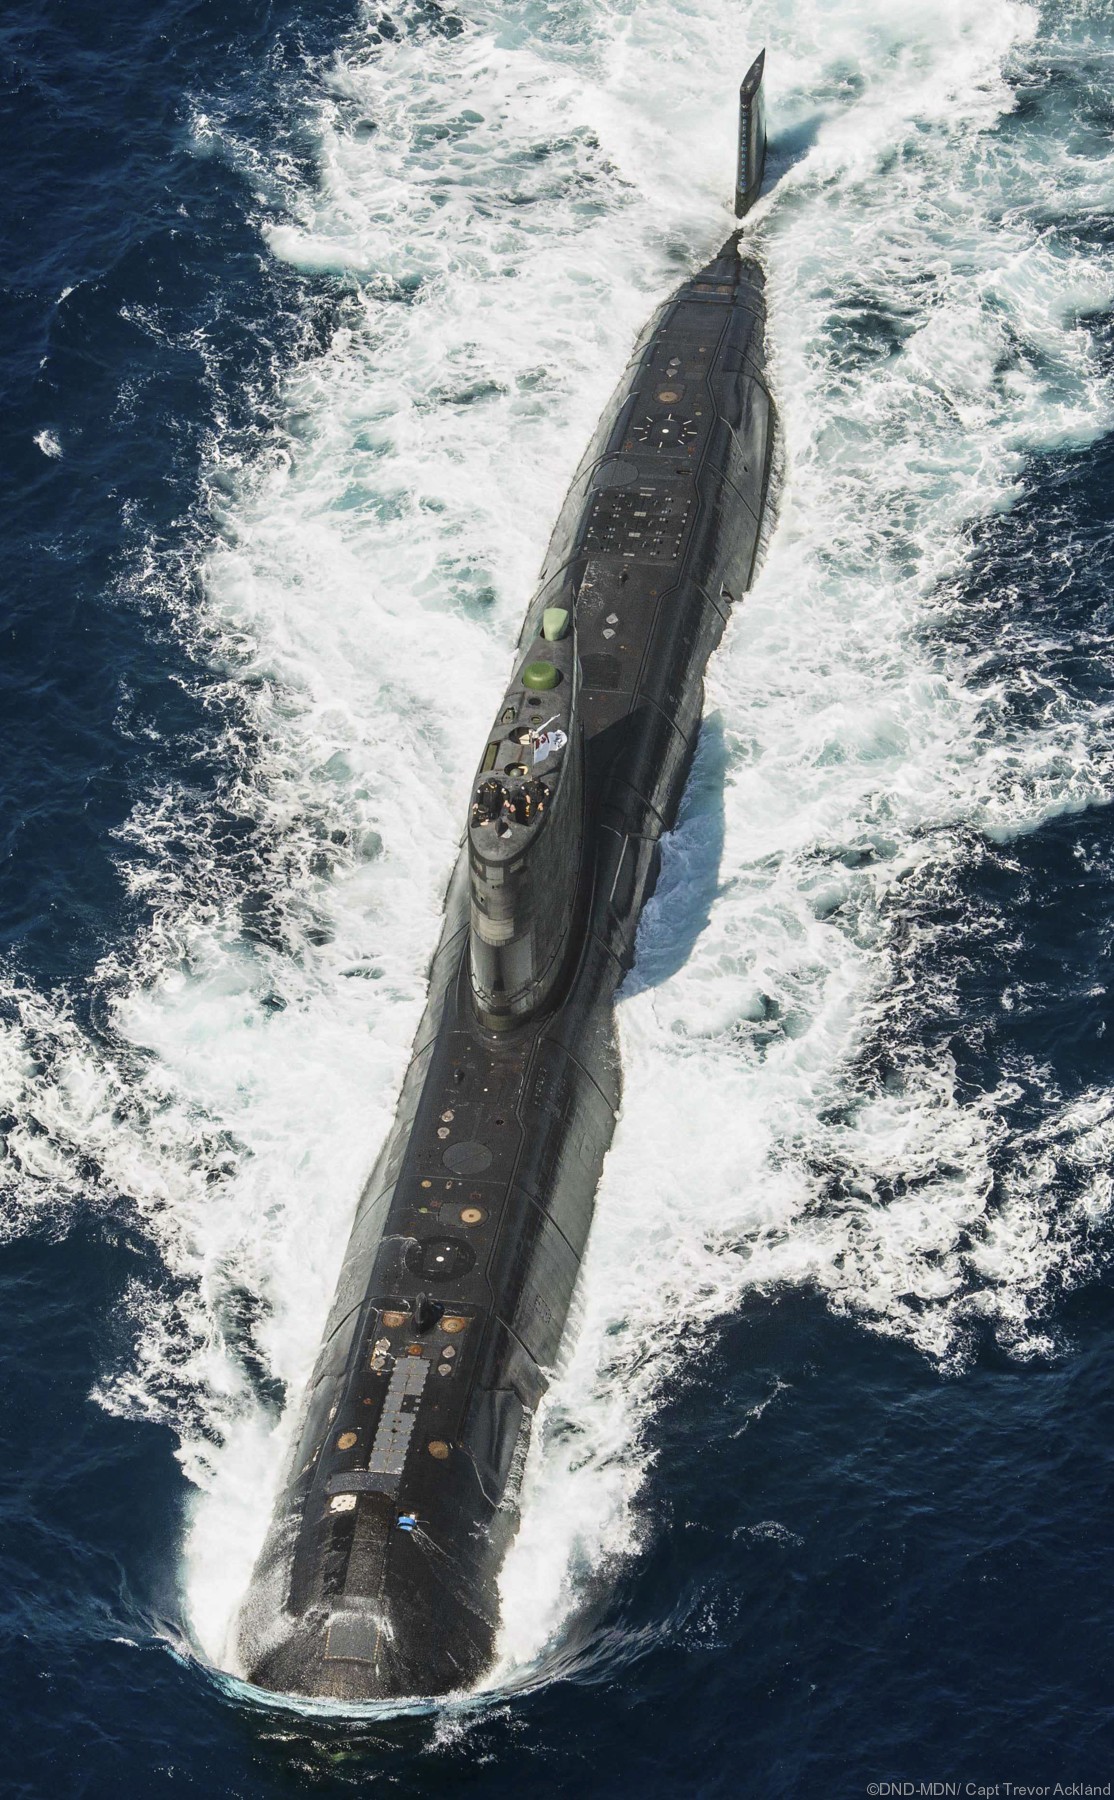 ssk-877 hmcs windsor victoria upholder class attack submarine hunter killer ncsm royal canadian navy 02